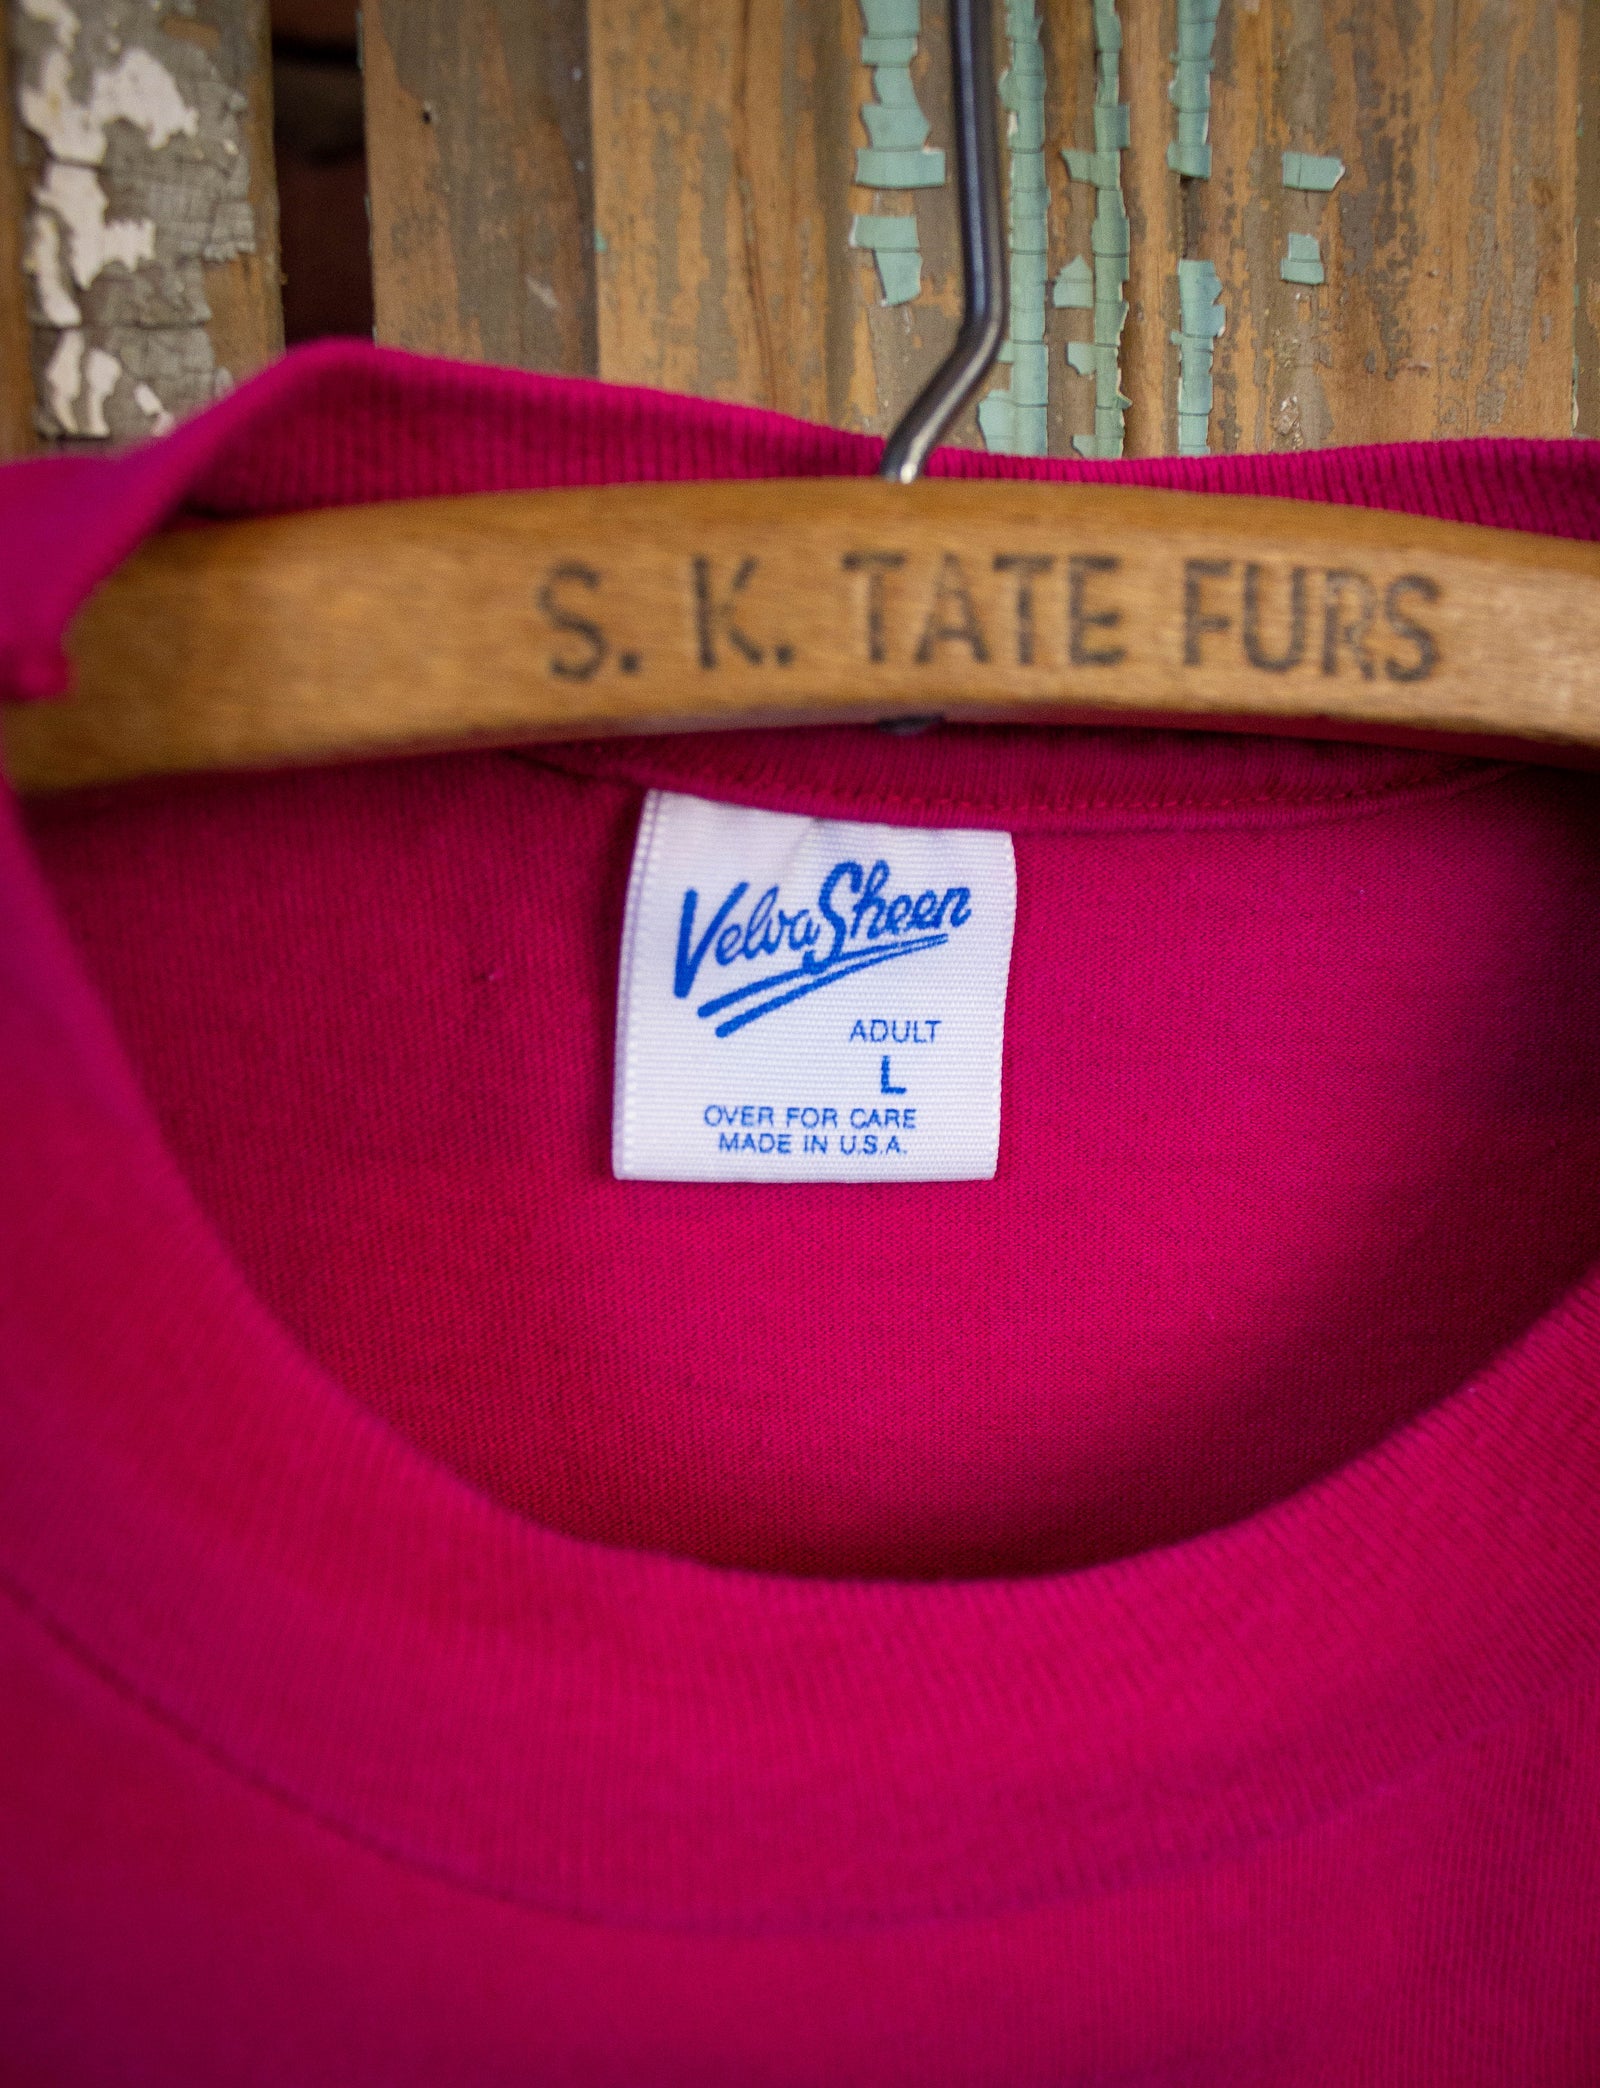 Vintage Disney Goofy Velva Sheen Graphic T-Shirt Pink 1990s L